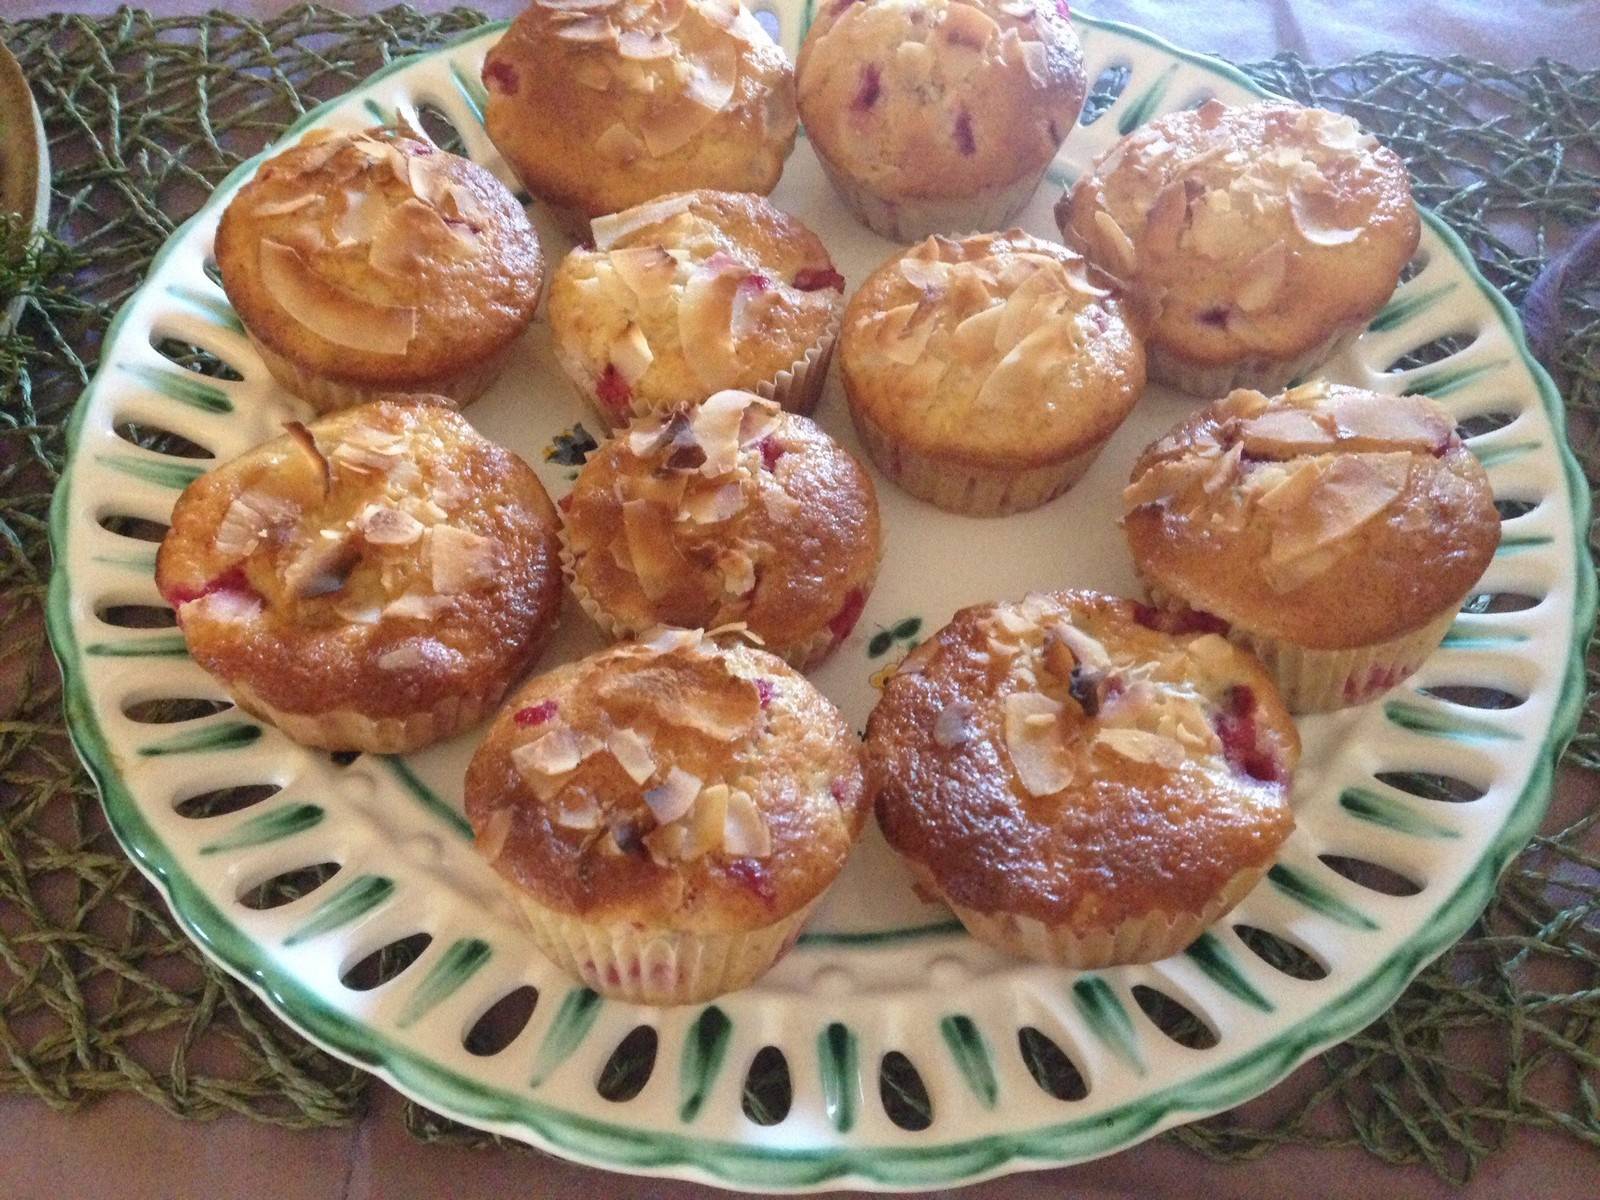 Ribisel-Kokos-Muffins